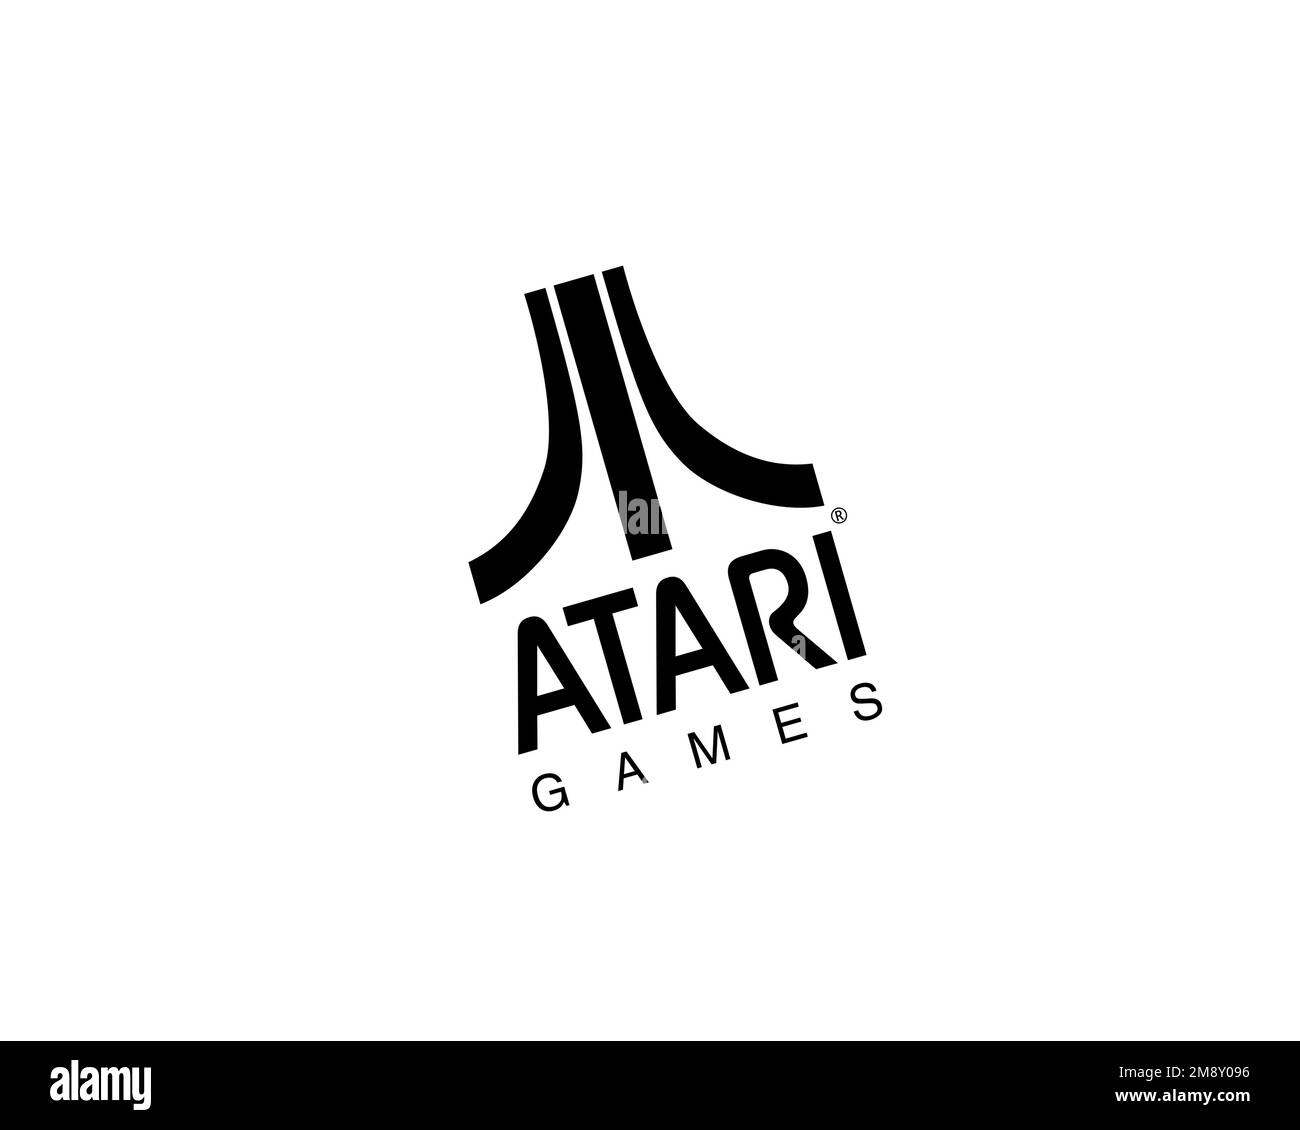 Atari Games, rotated logo, white background Stock Photo